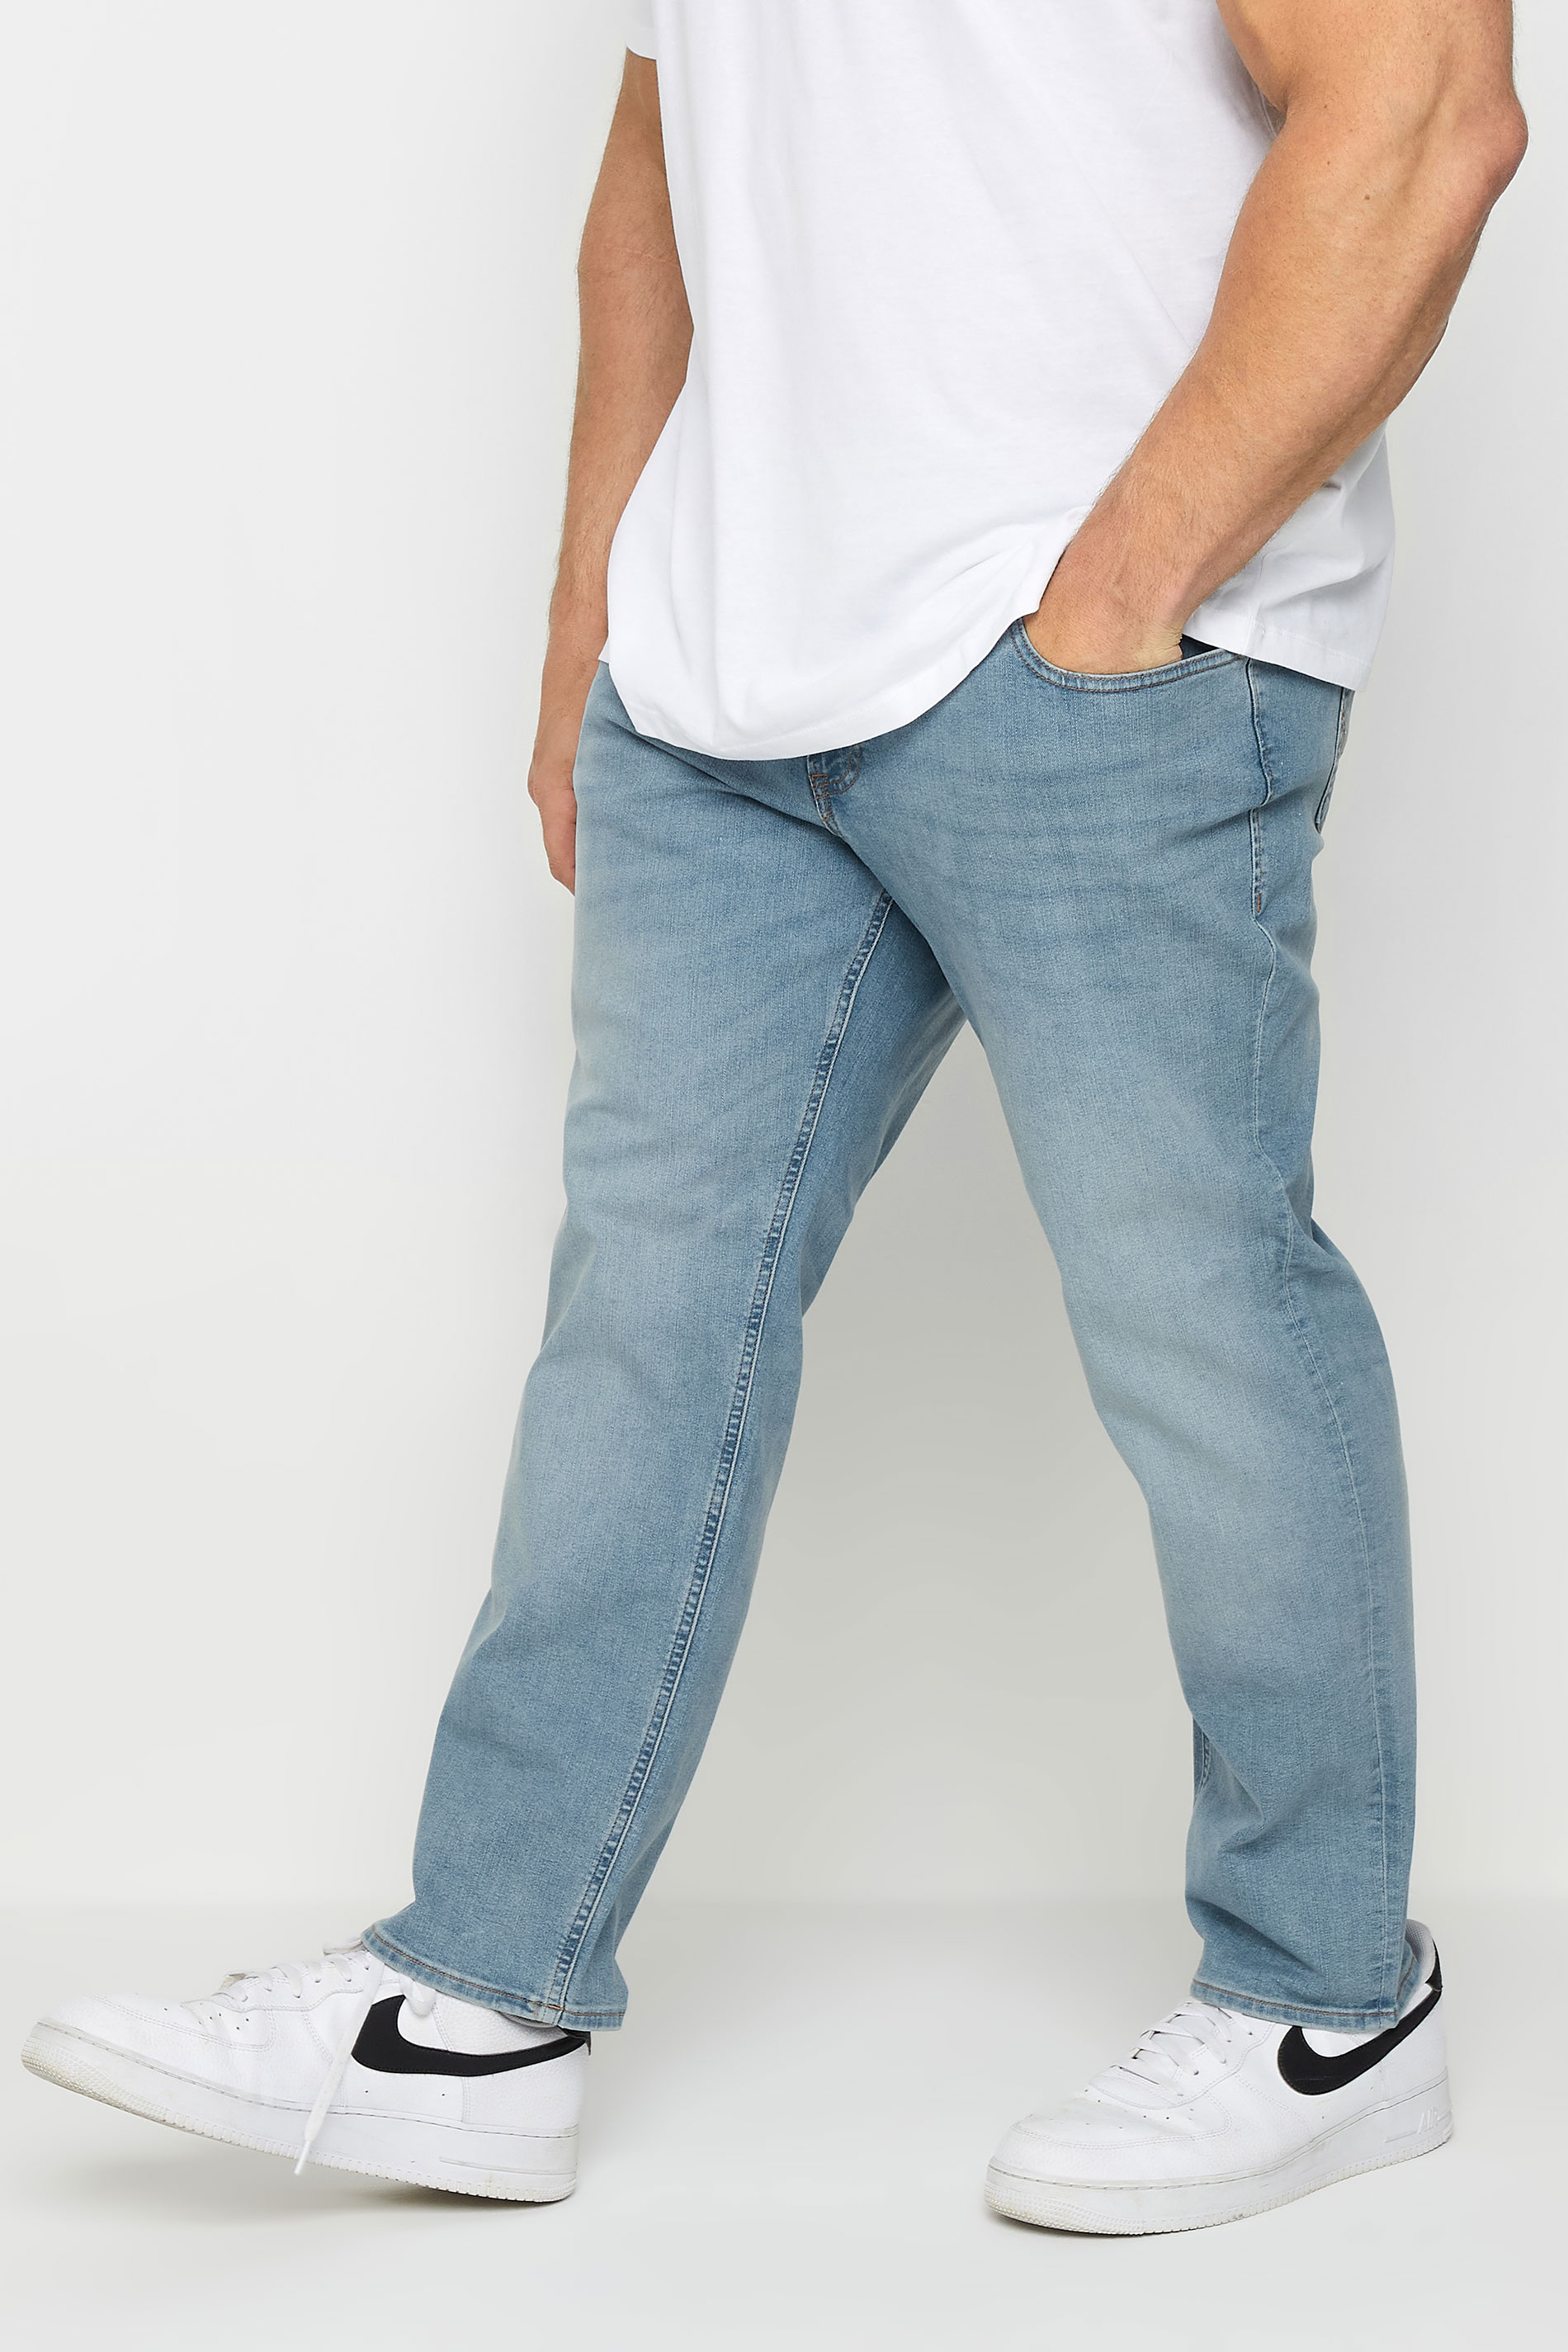 Image of Inside Leg Size 30", Waist Size 44 Mens Jack & Jones Big & Tall Blue Light Wash Mike Jeans Big & Tall